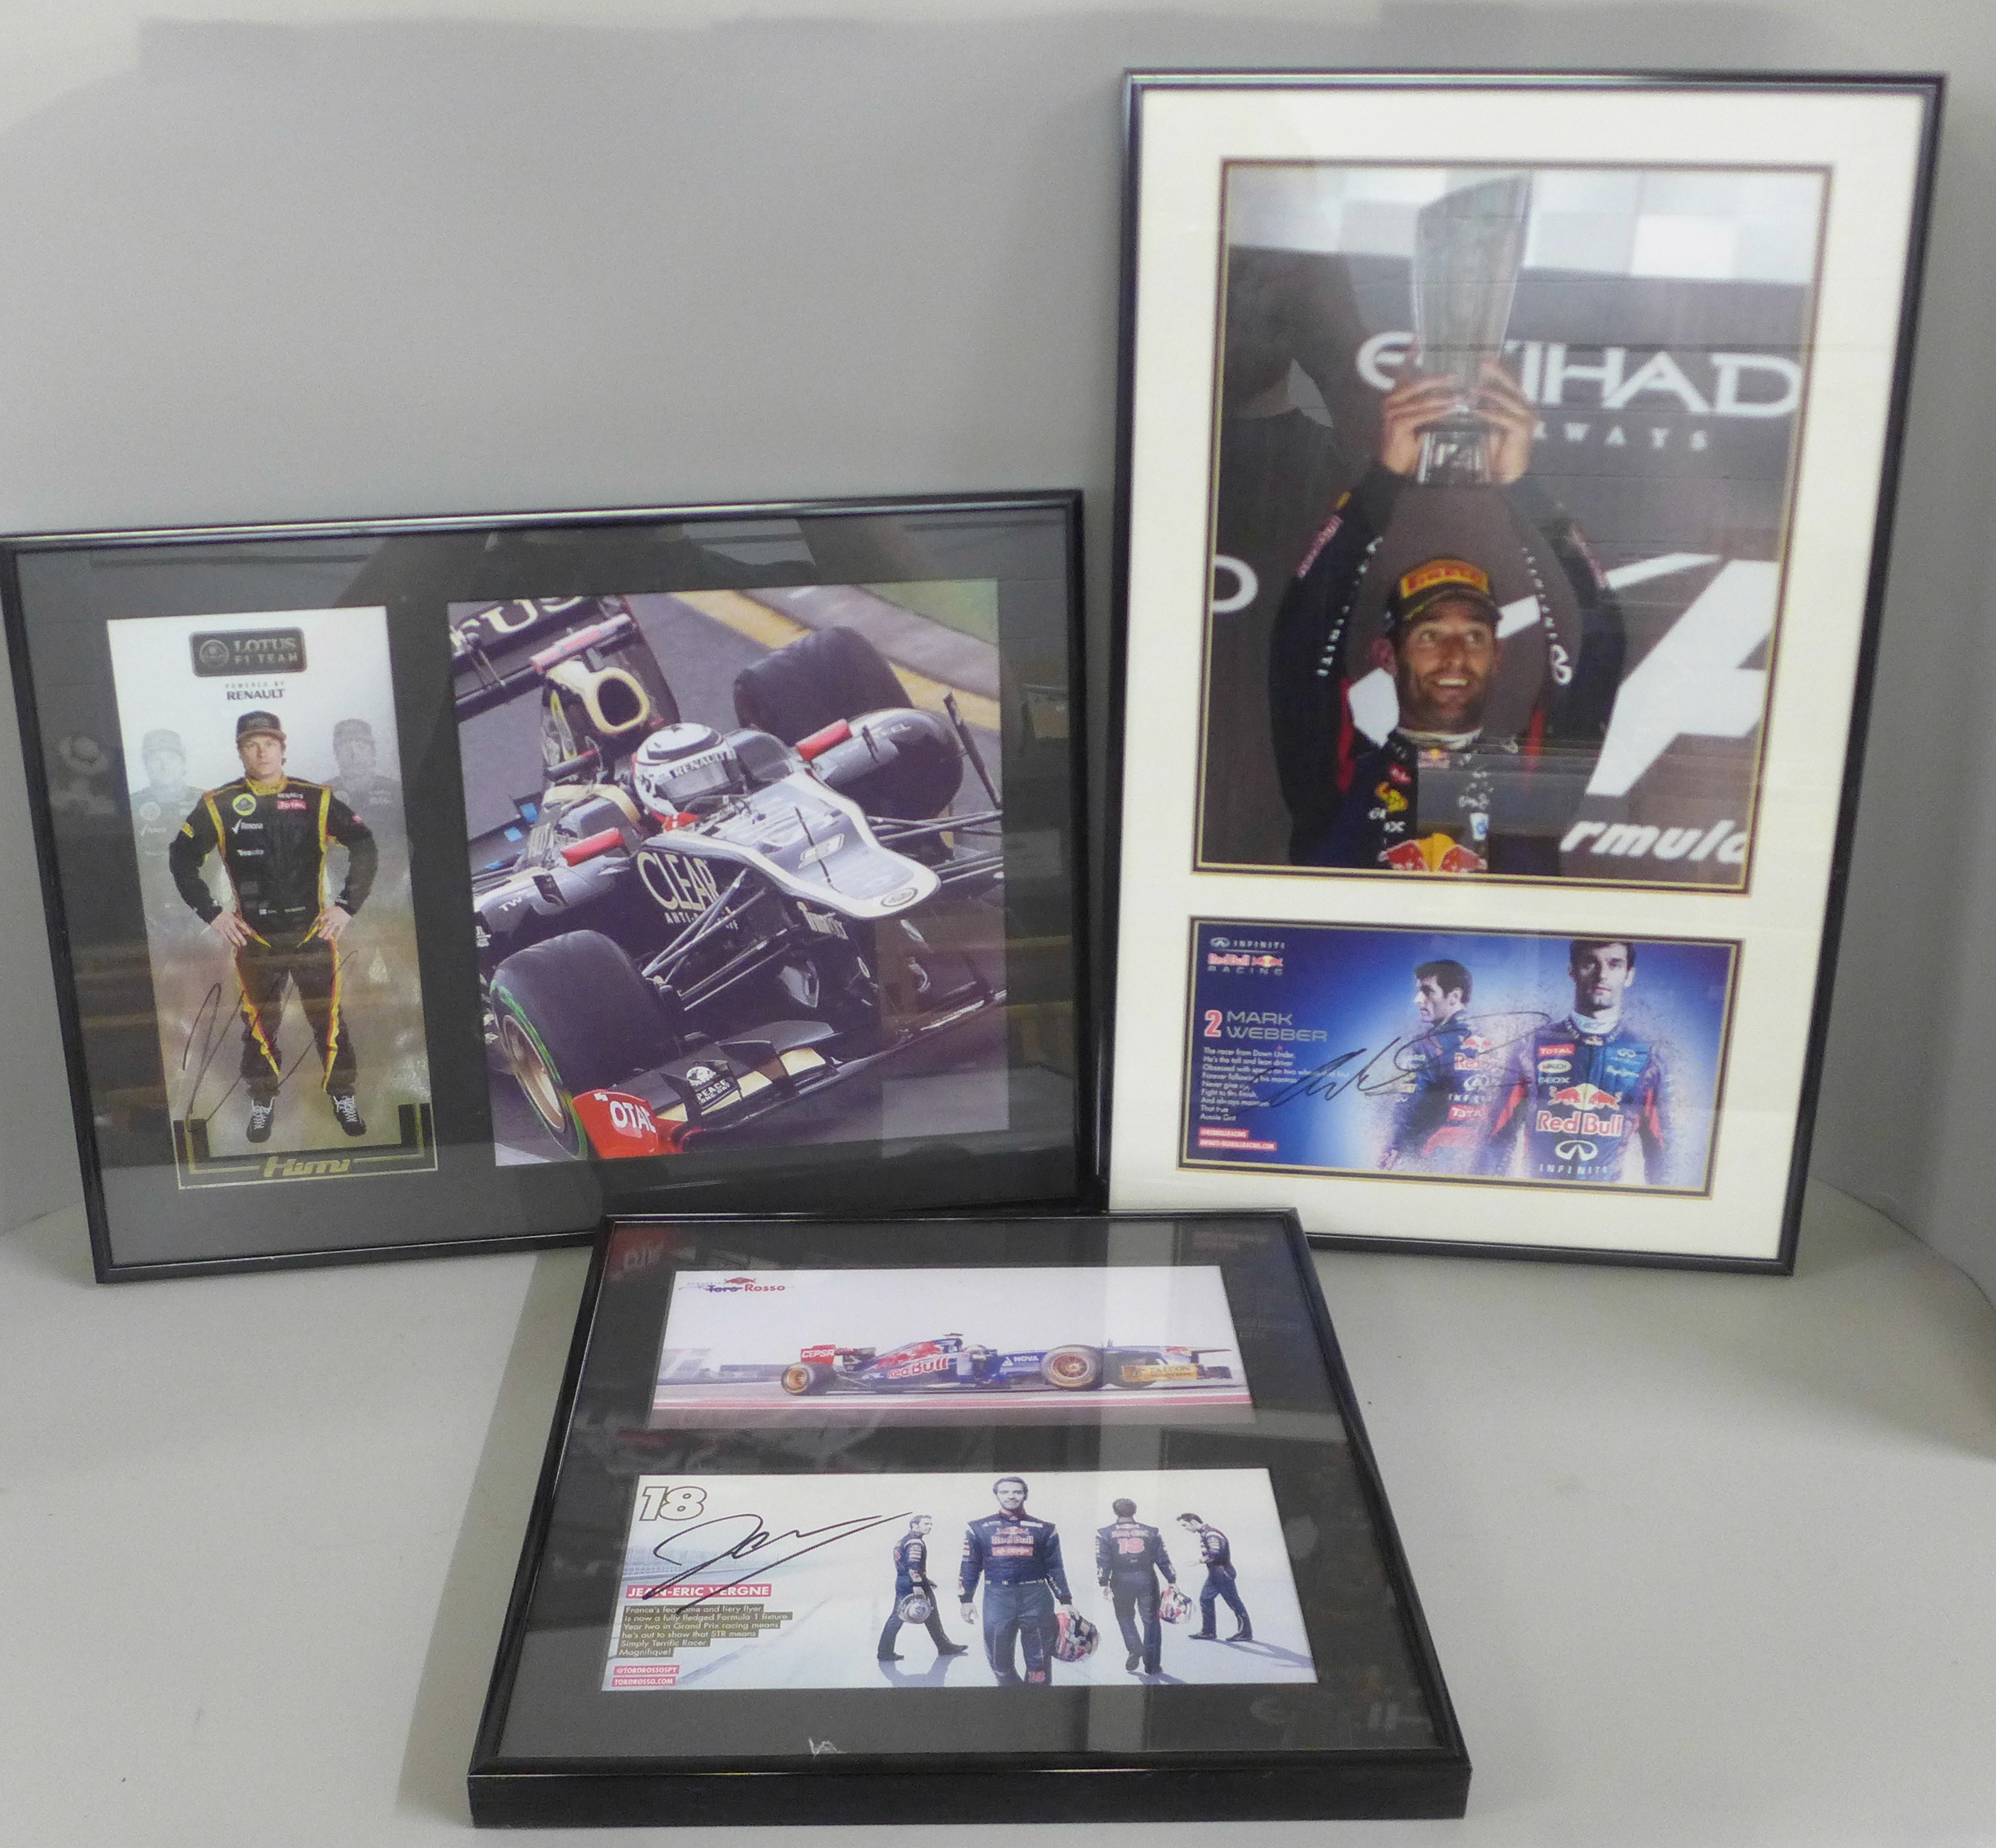 Three motor racing autograph displays, Jean-Eric Vergne, Mark Webber and Kimi Räikkönen, each with